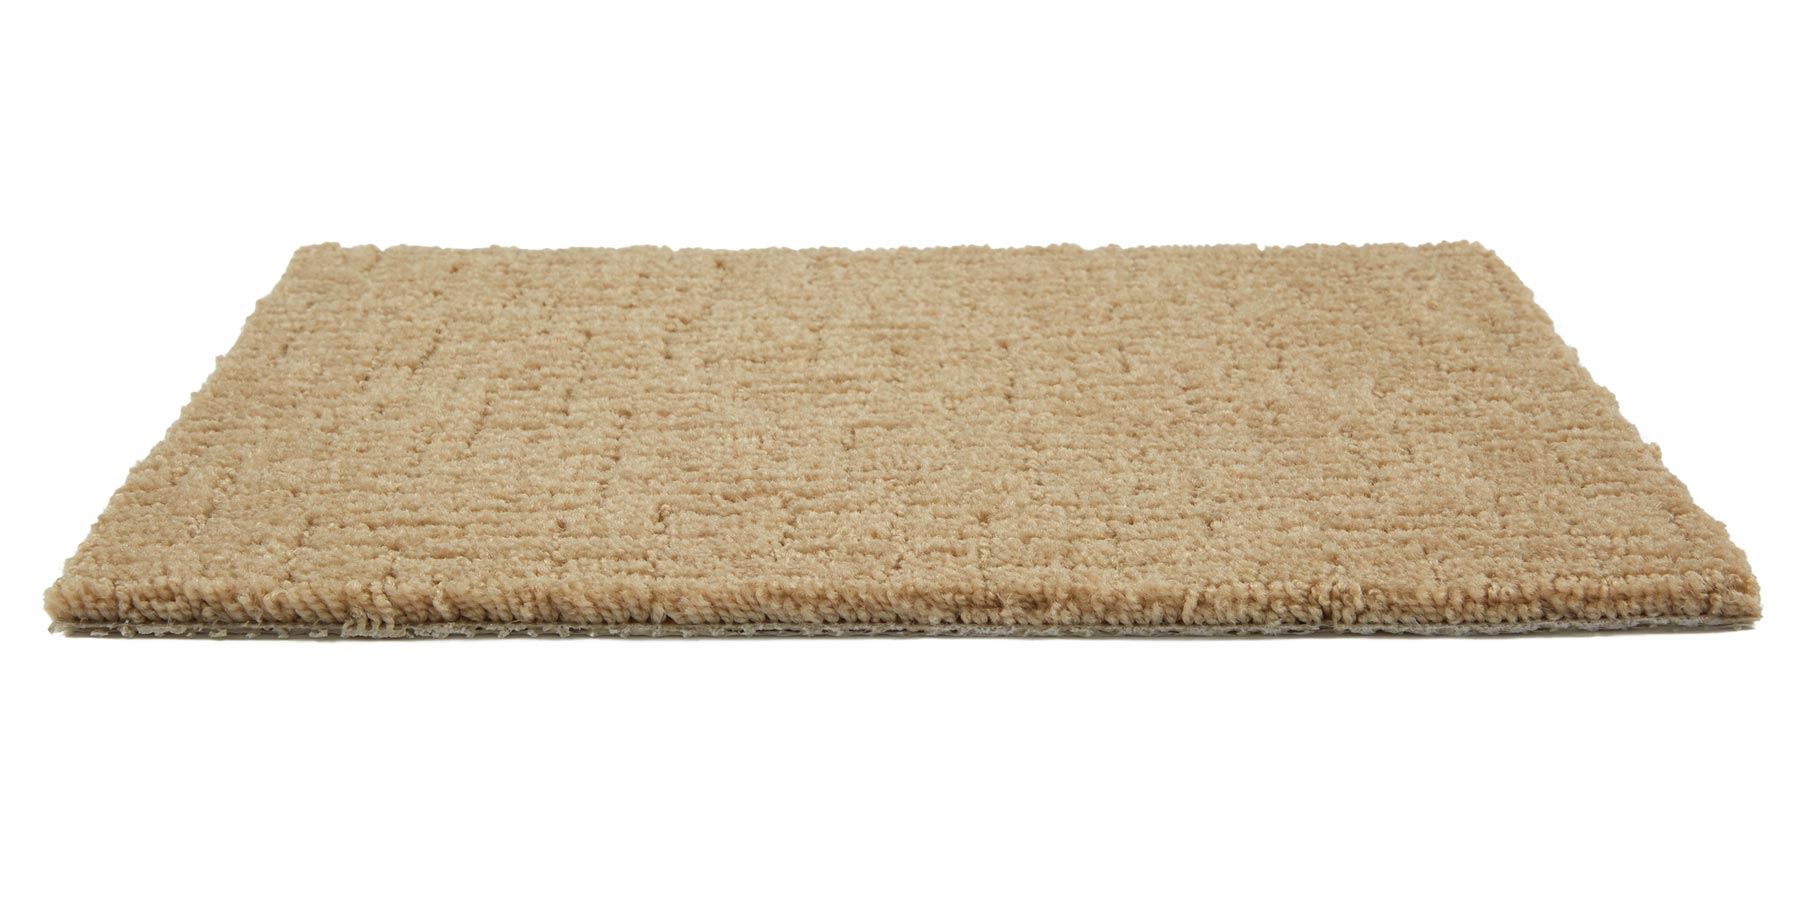 Shindig Cilantro Carpet